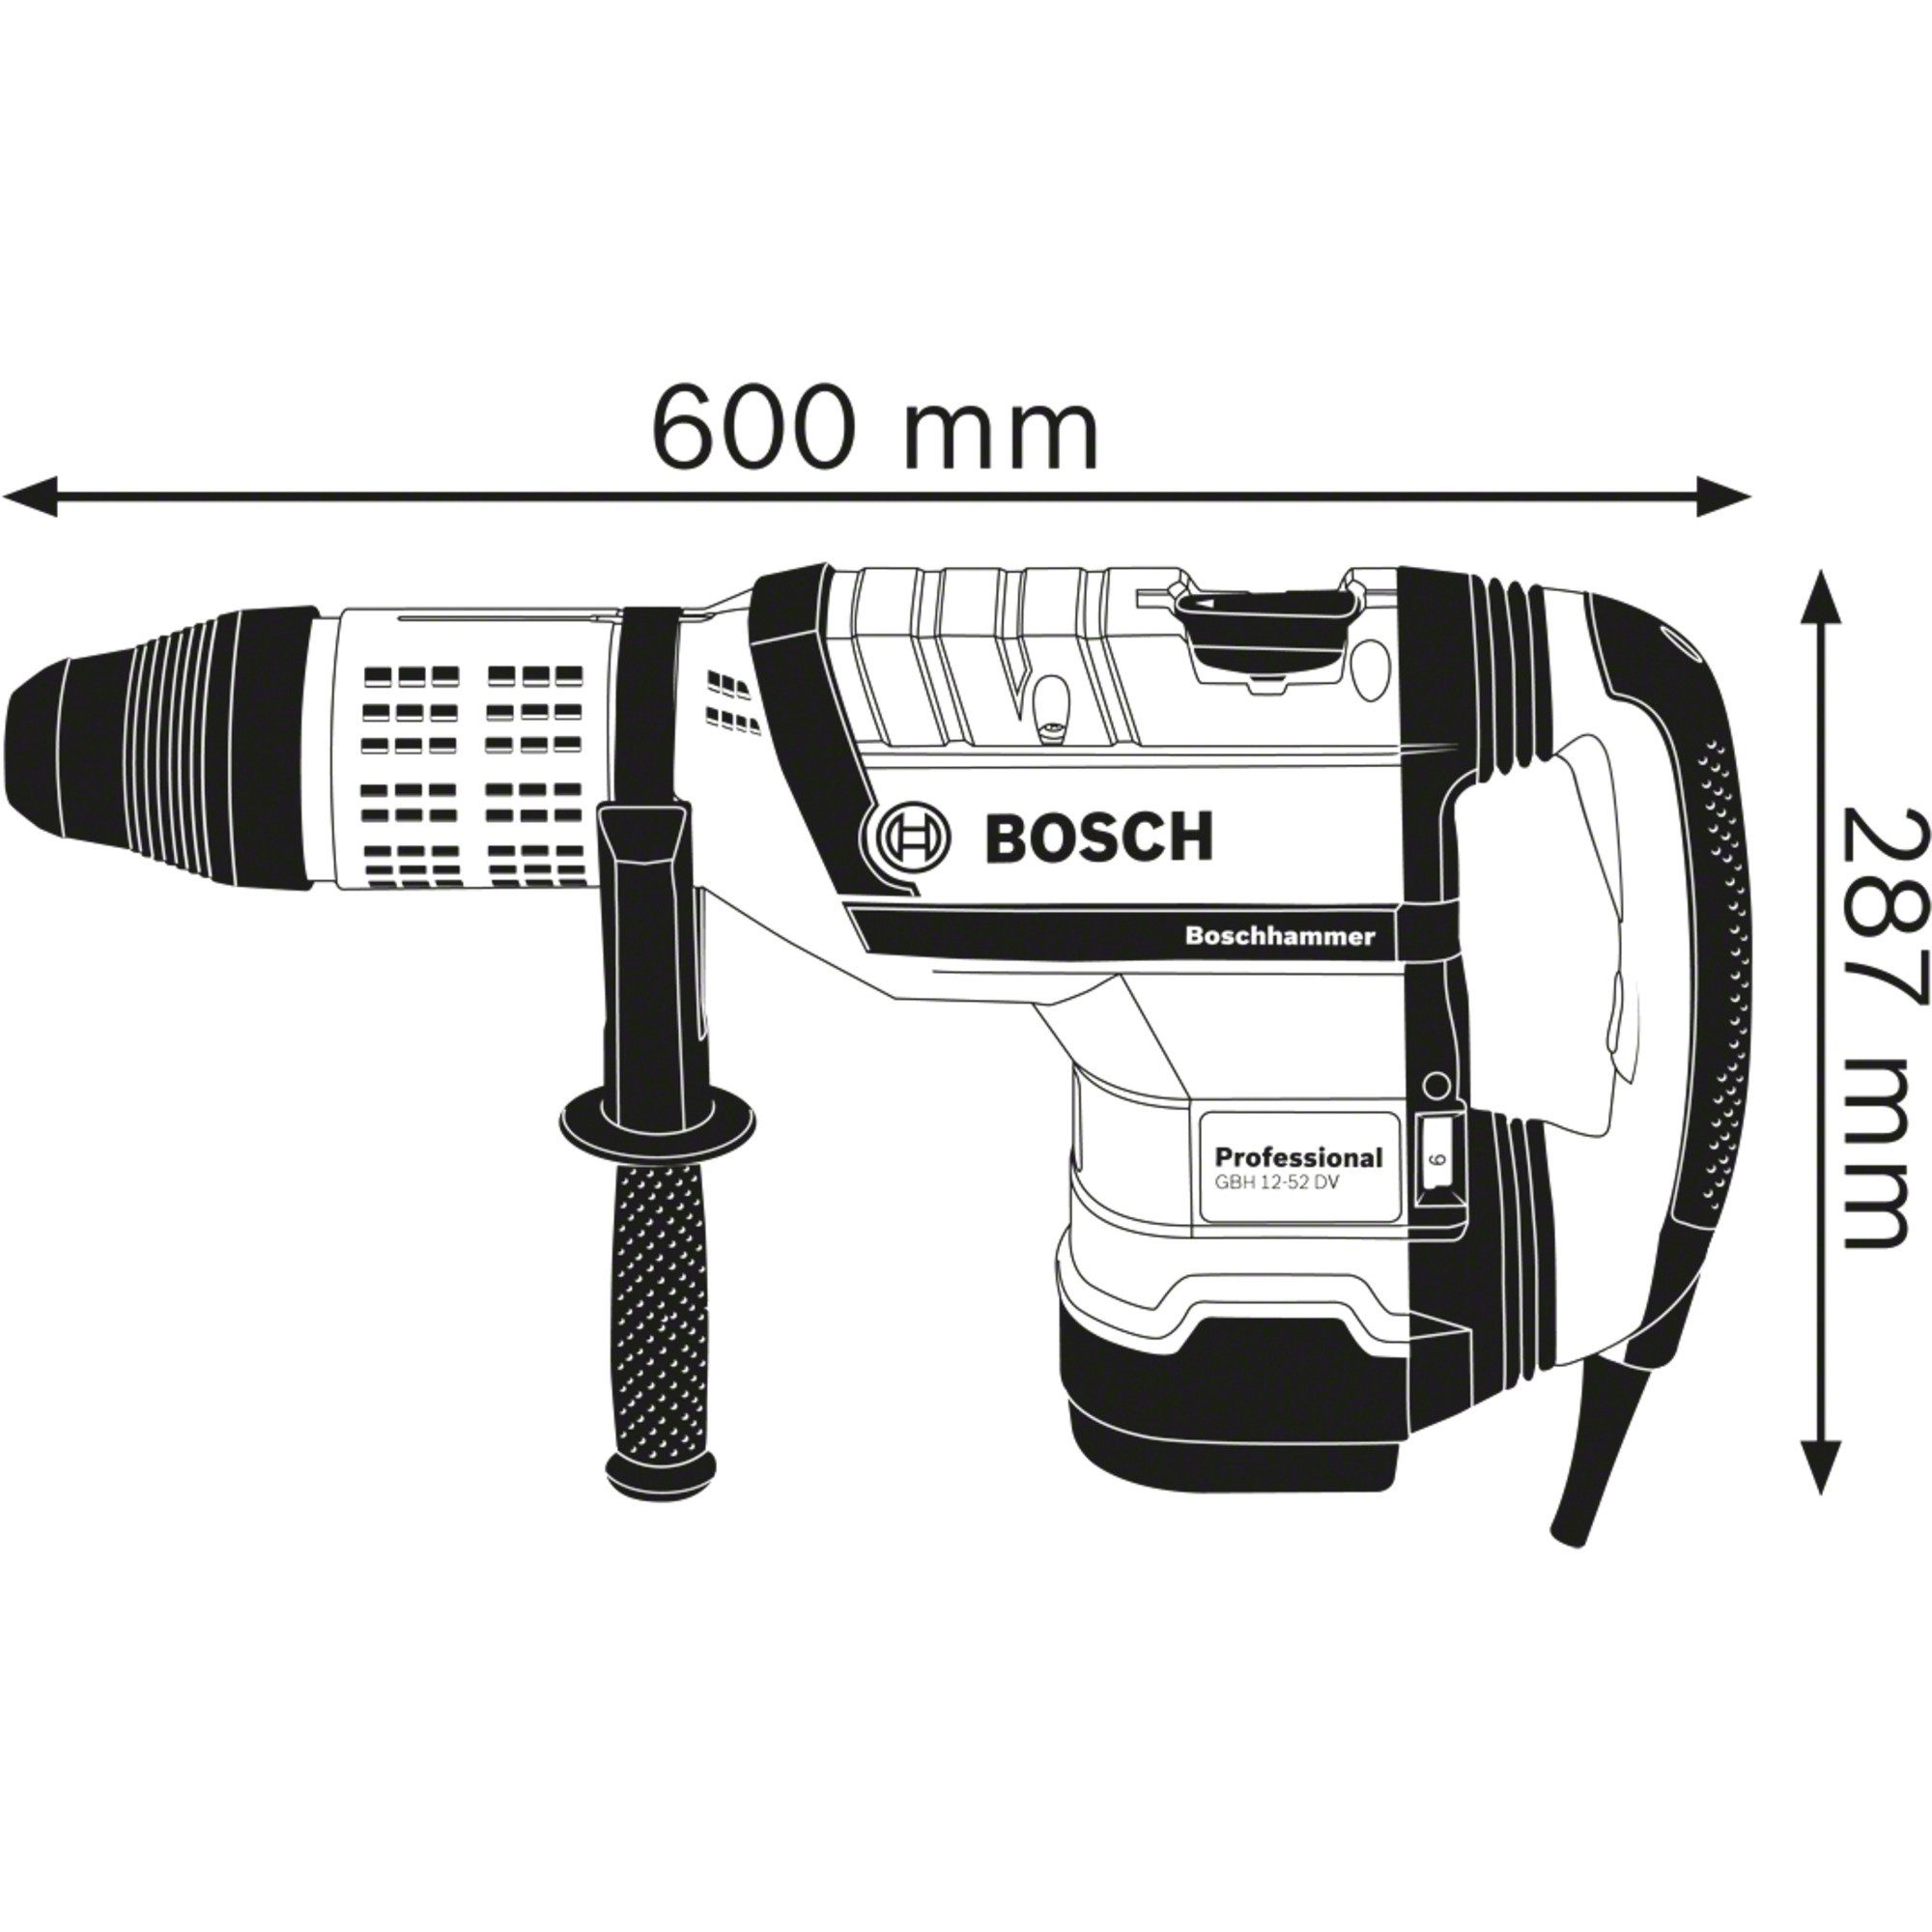 BOSCH Bohrhammer Bosch Professional Bohrhammer GBH 12-52 DV, (1.700,  Leistung/Spannung: 1.700 Watt